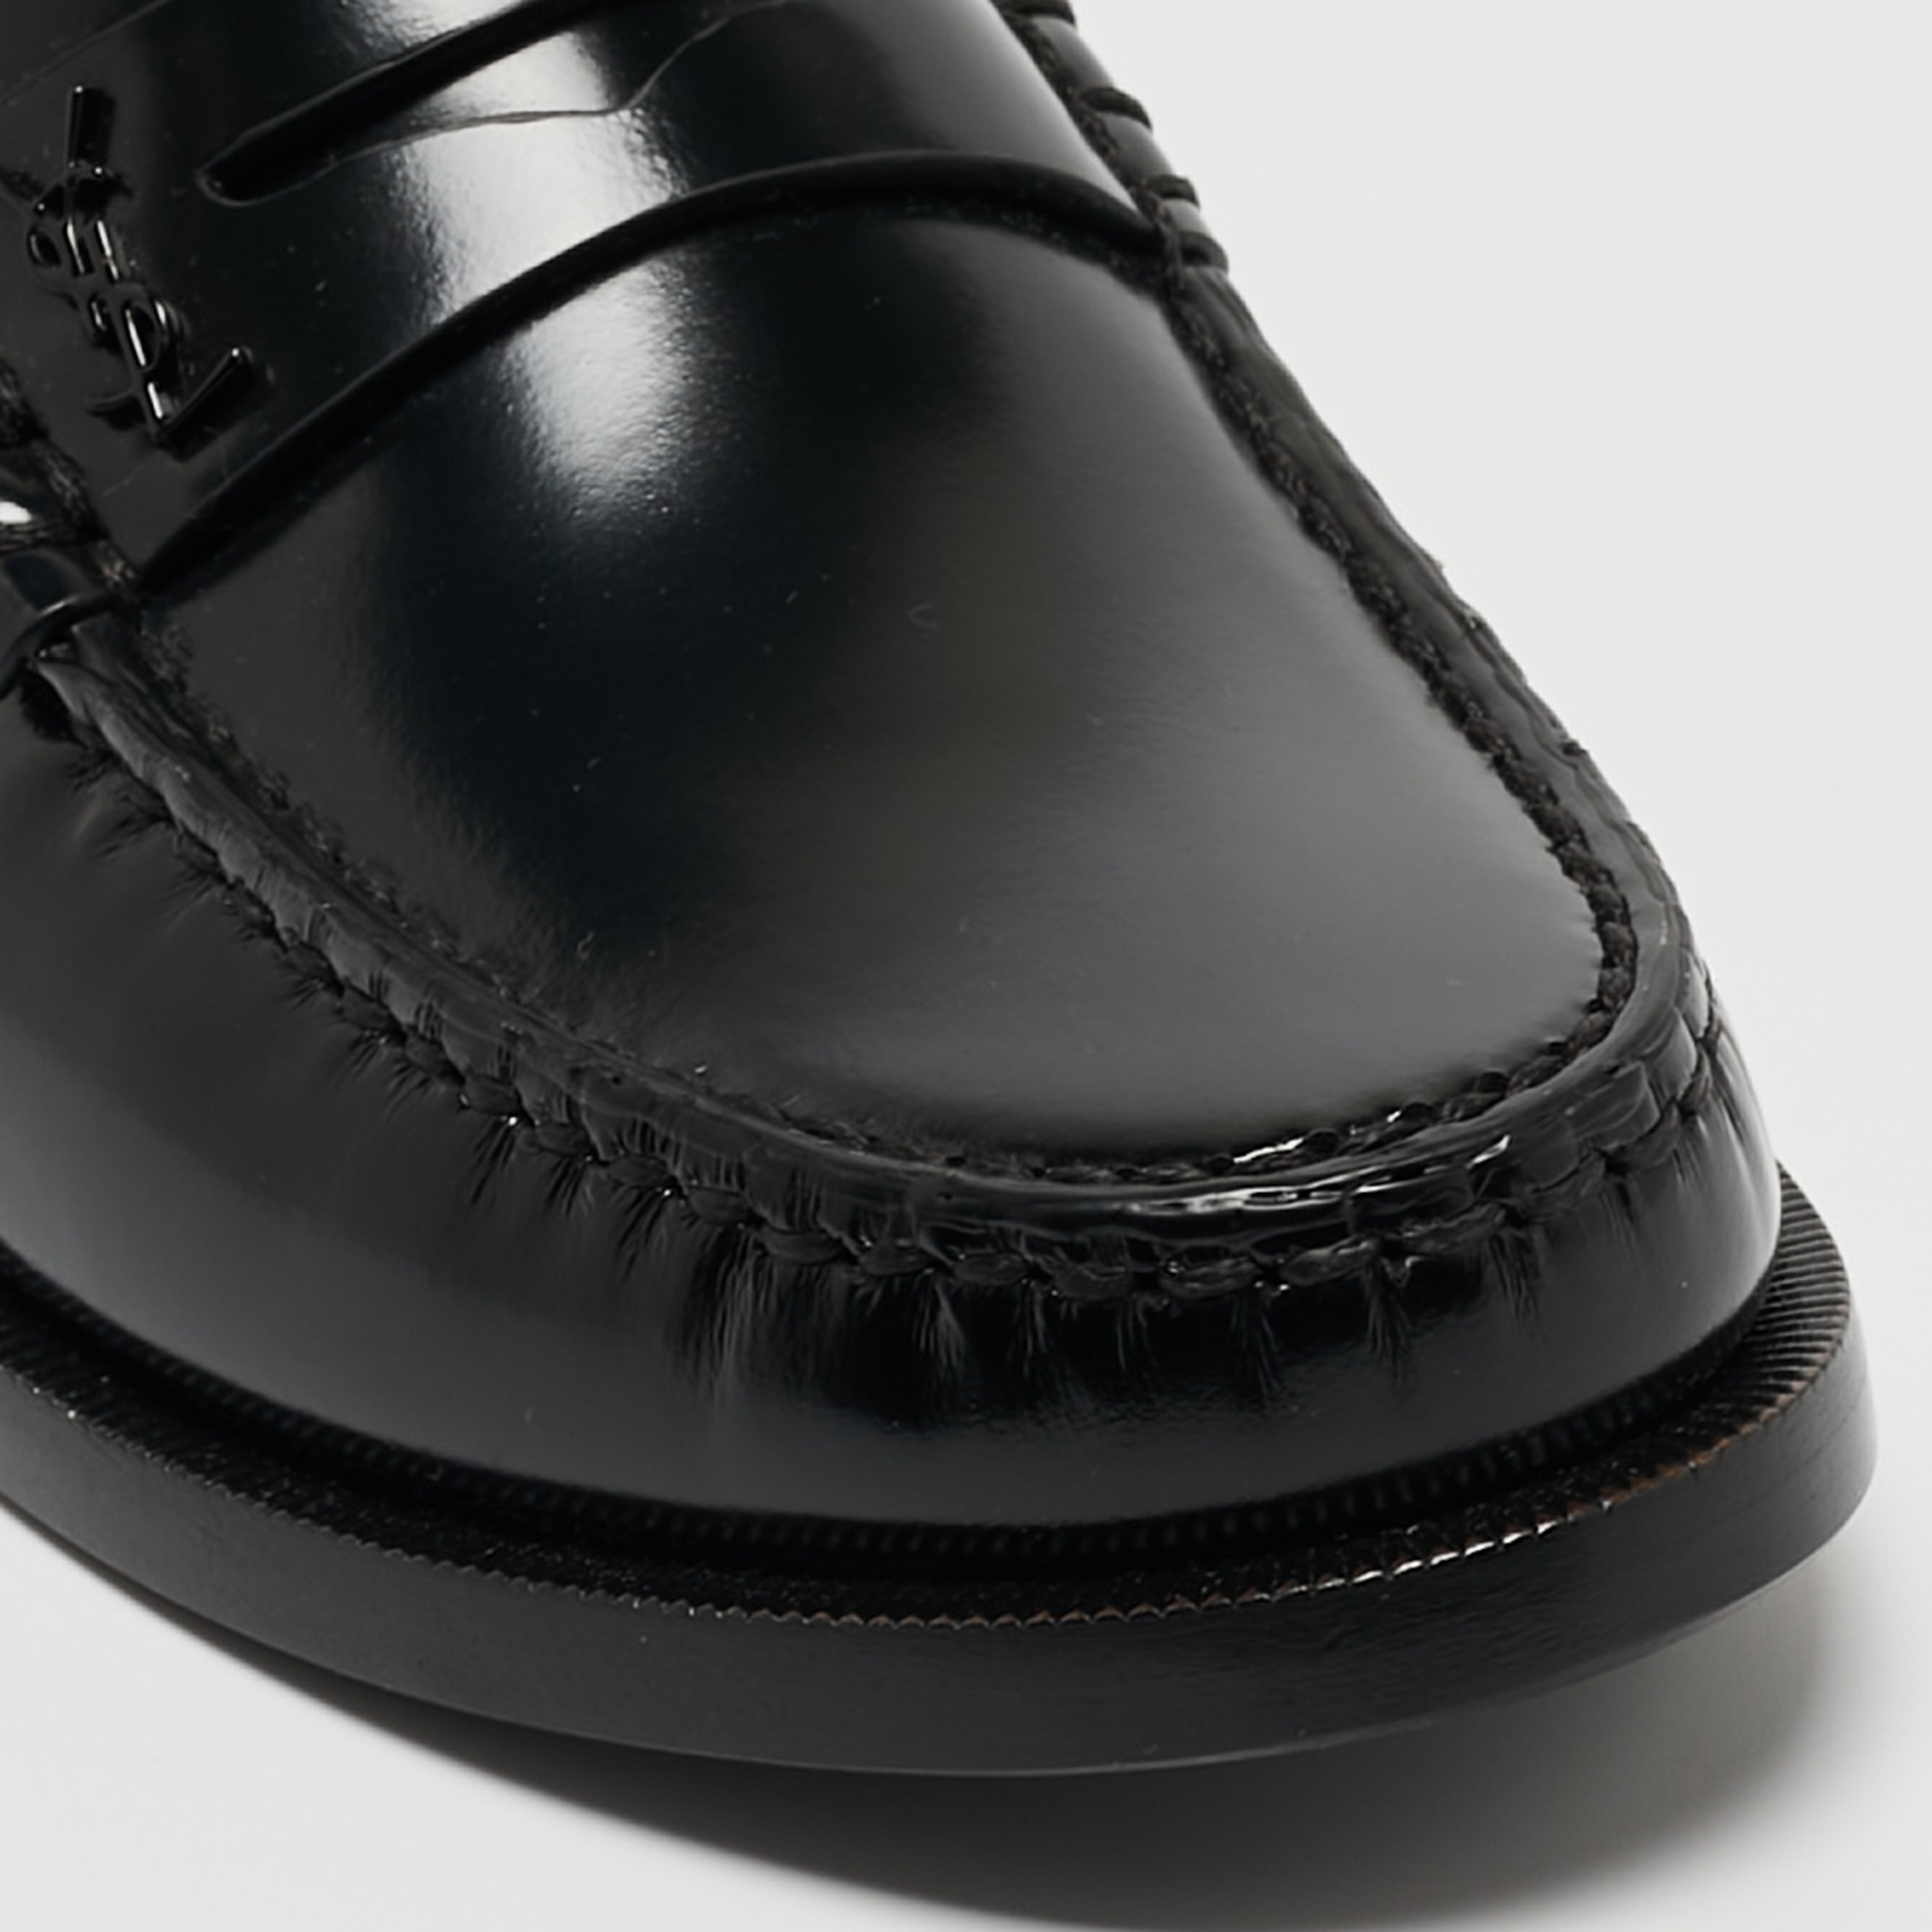 Saint Laurent Black Leather Slip On Loafers Size 37